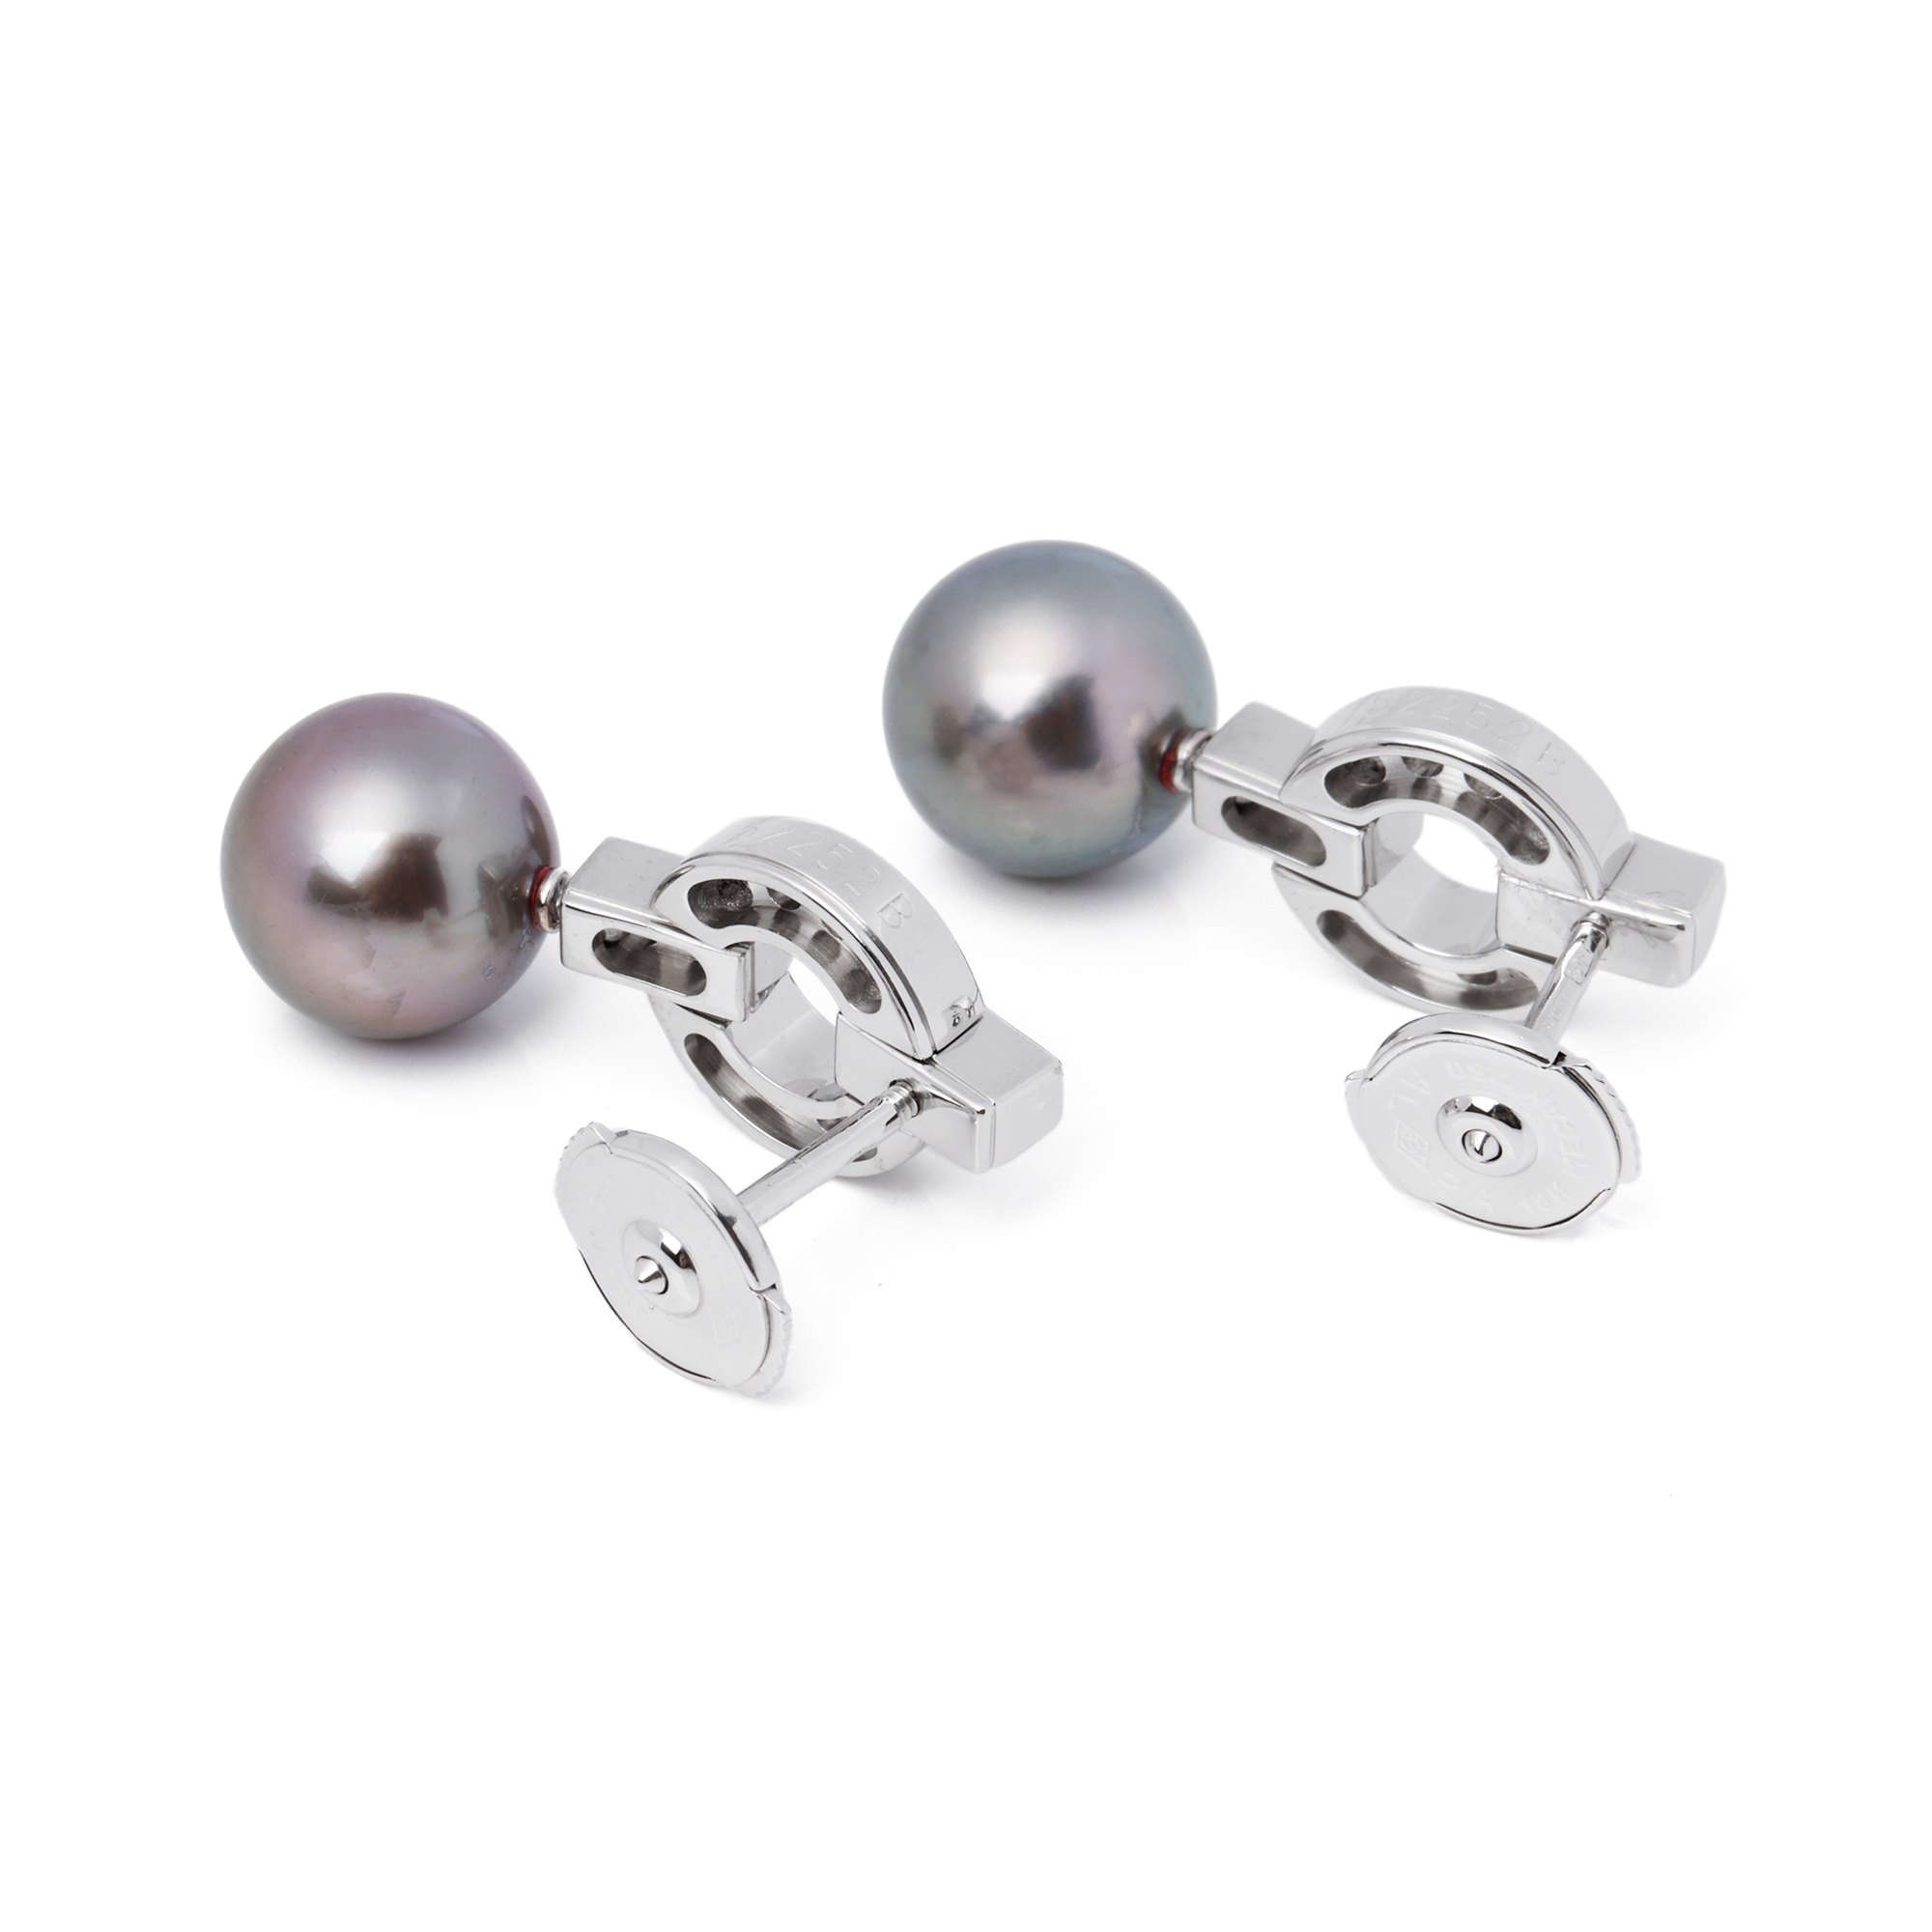 Cartier Himalia Diamond and Pearl Earrings